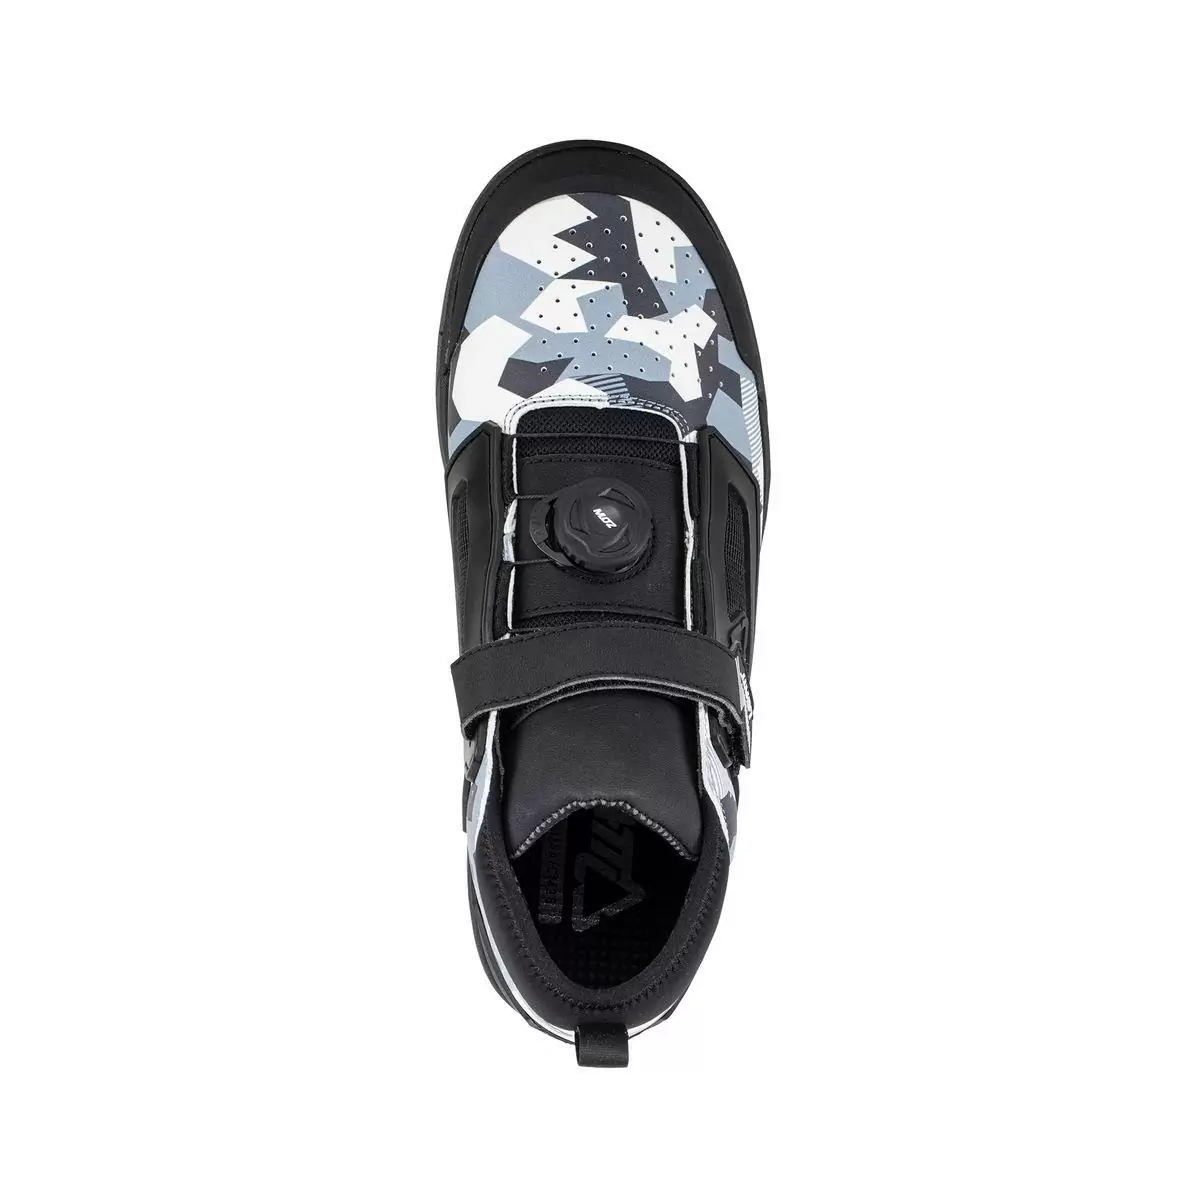 Shoes MTB 3.0 Flat Pro White/Black Size 41.5 #2